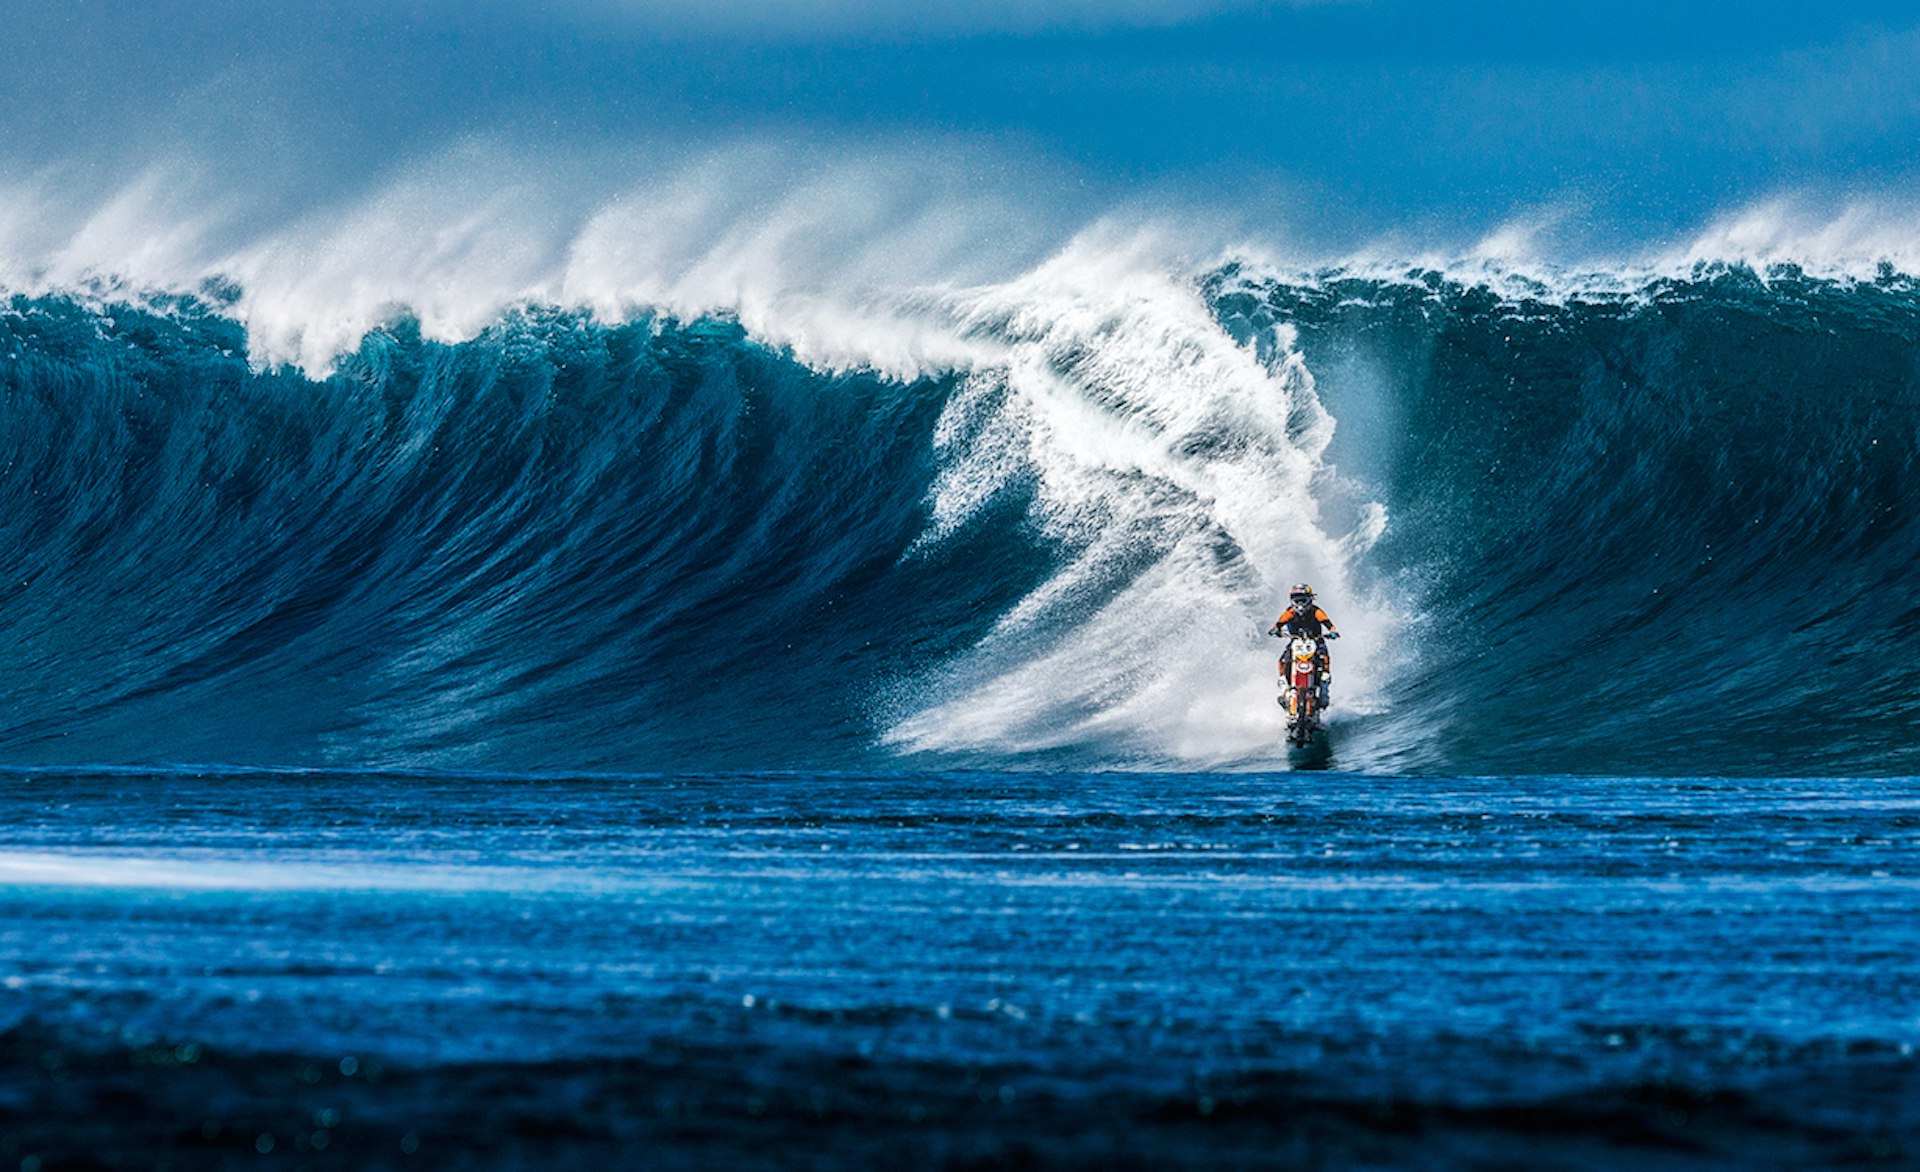 Australian stuntman Robbie Maddison surfs the waves of Tahiti on his dirt bike